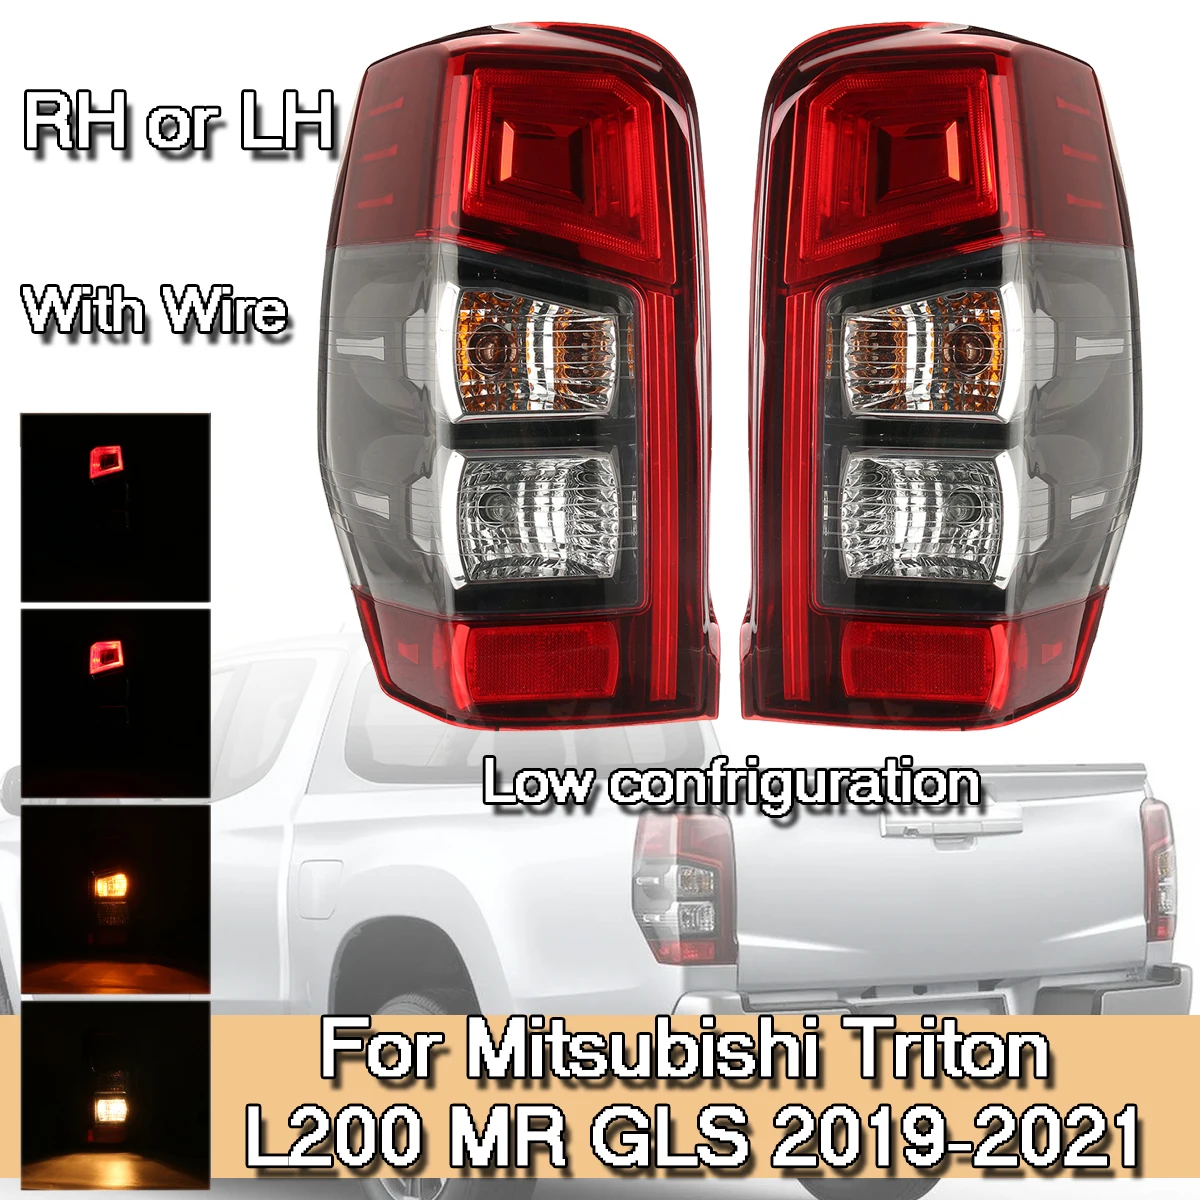 

Car Taillight Signal Lamp Rear Tail light With Wire no Bulb For Mitsubishi Triton L200 MR GLS 2019 2020 2021 Car Accessorie